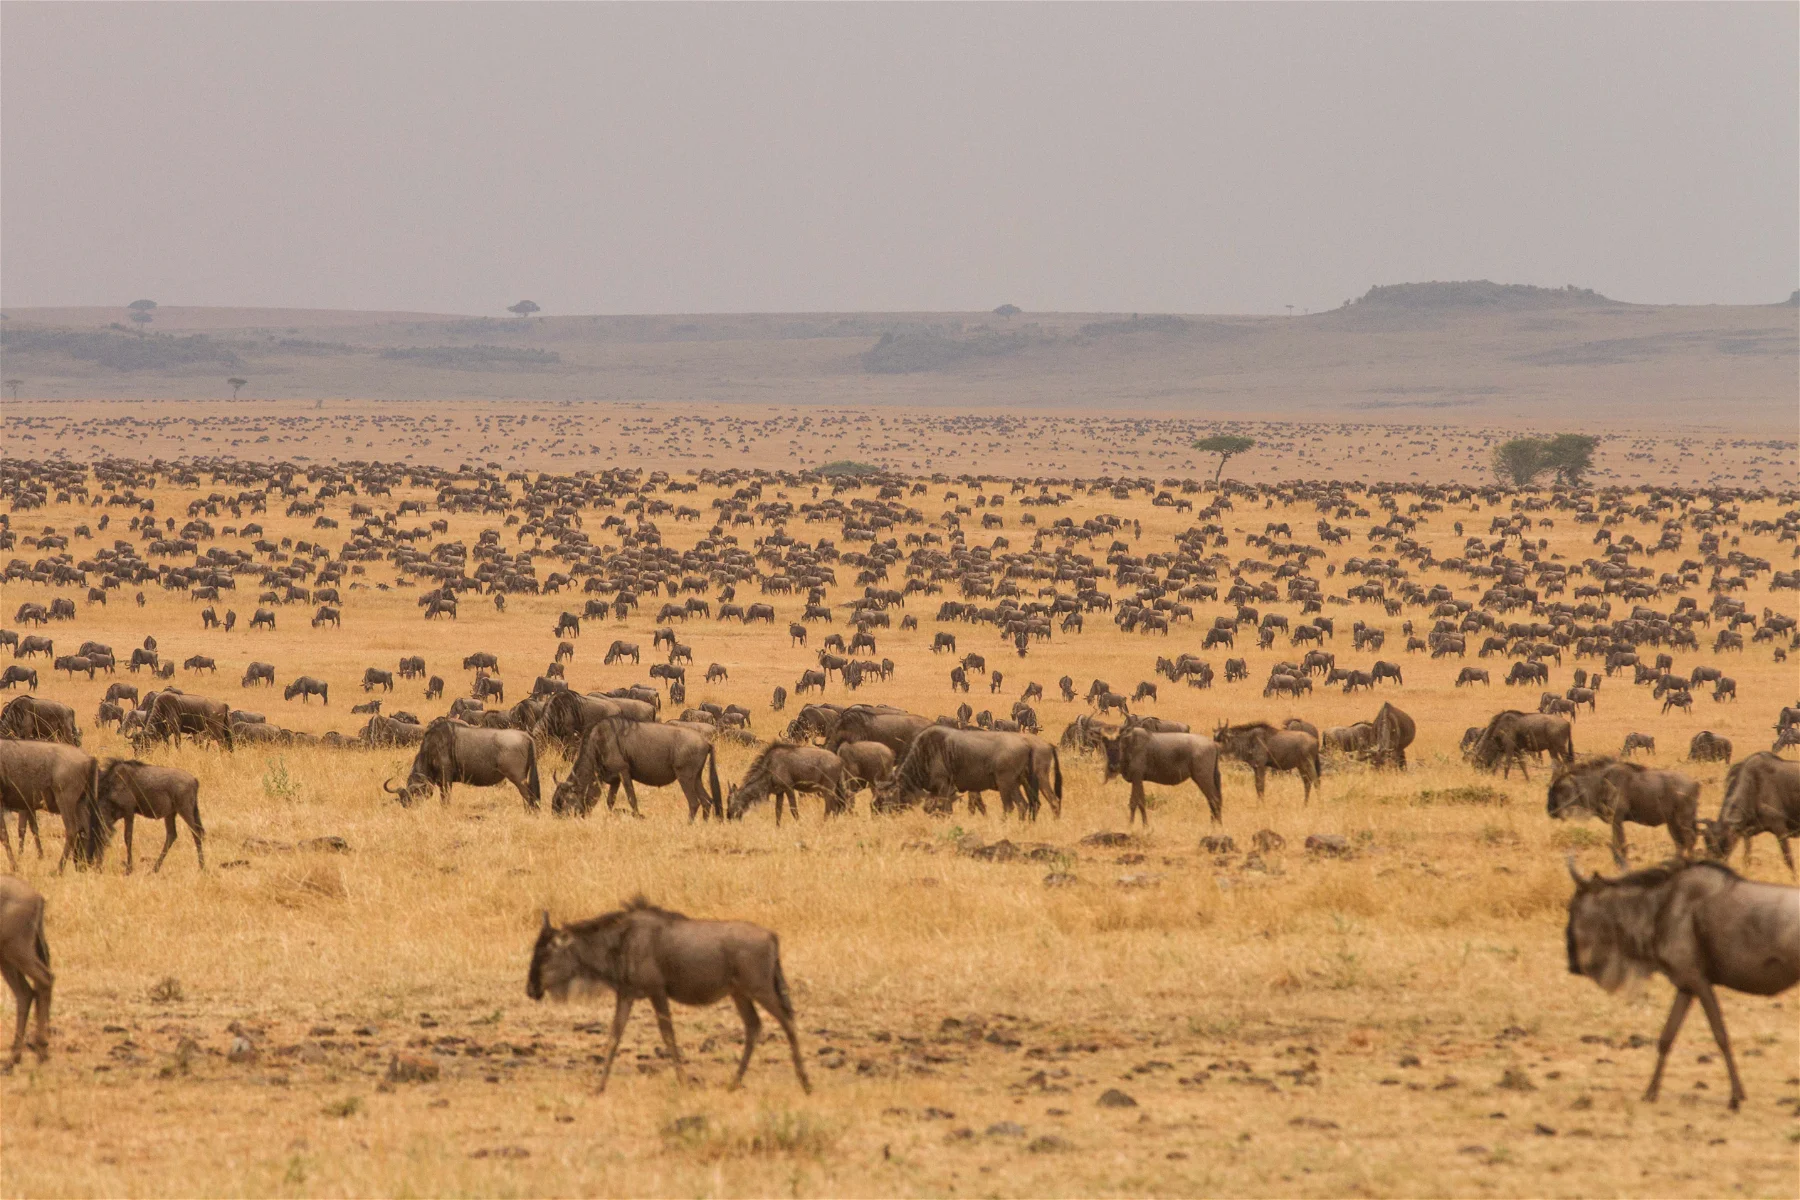 Northern Serengeti National Park